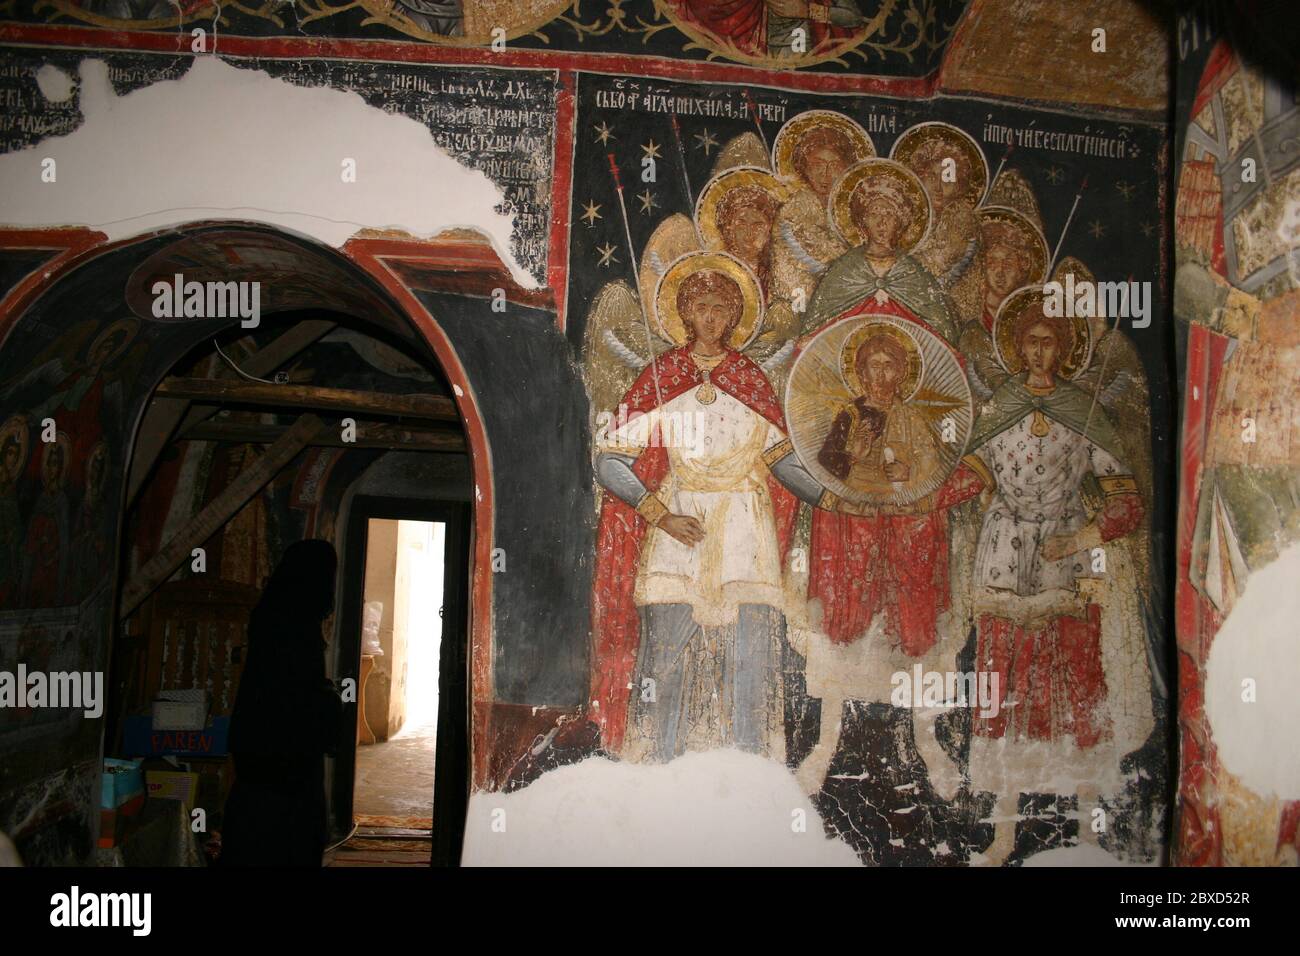 Arnota Monastery, Valcea County, Romania. Fresco of The Seven Archangels and Jesus Christ inside the 17th century church. Stock Photo